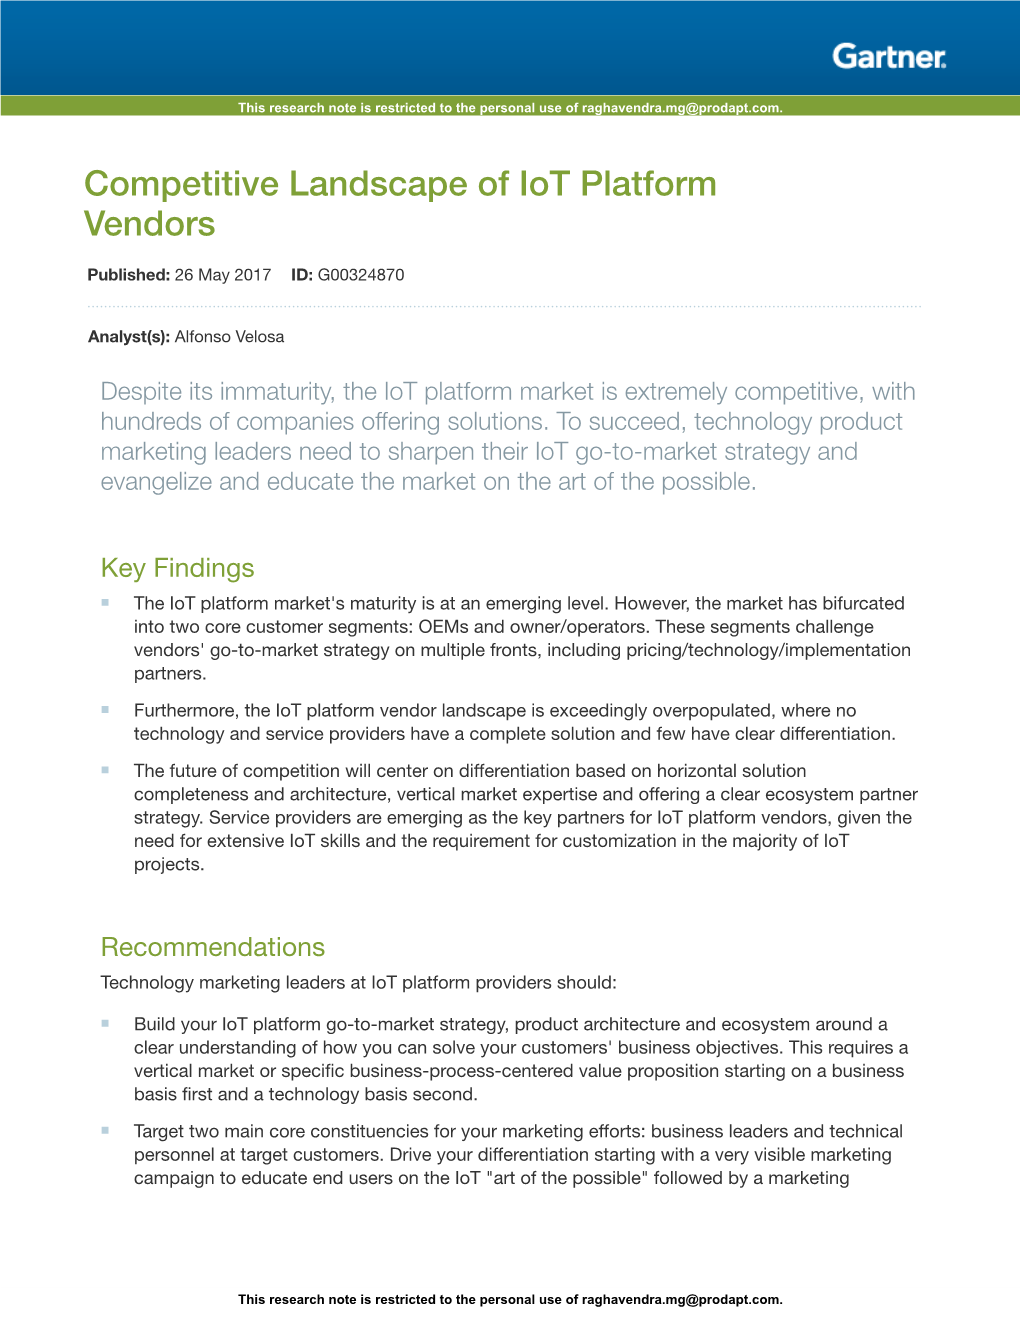 Competitive Landscape of Iot Platform Vendors